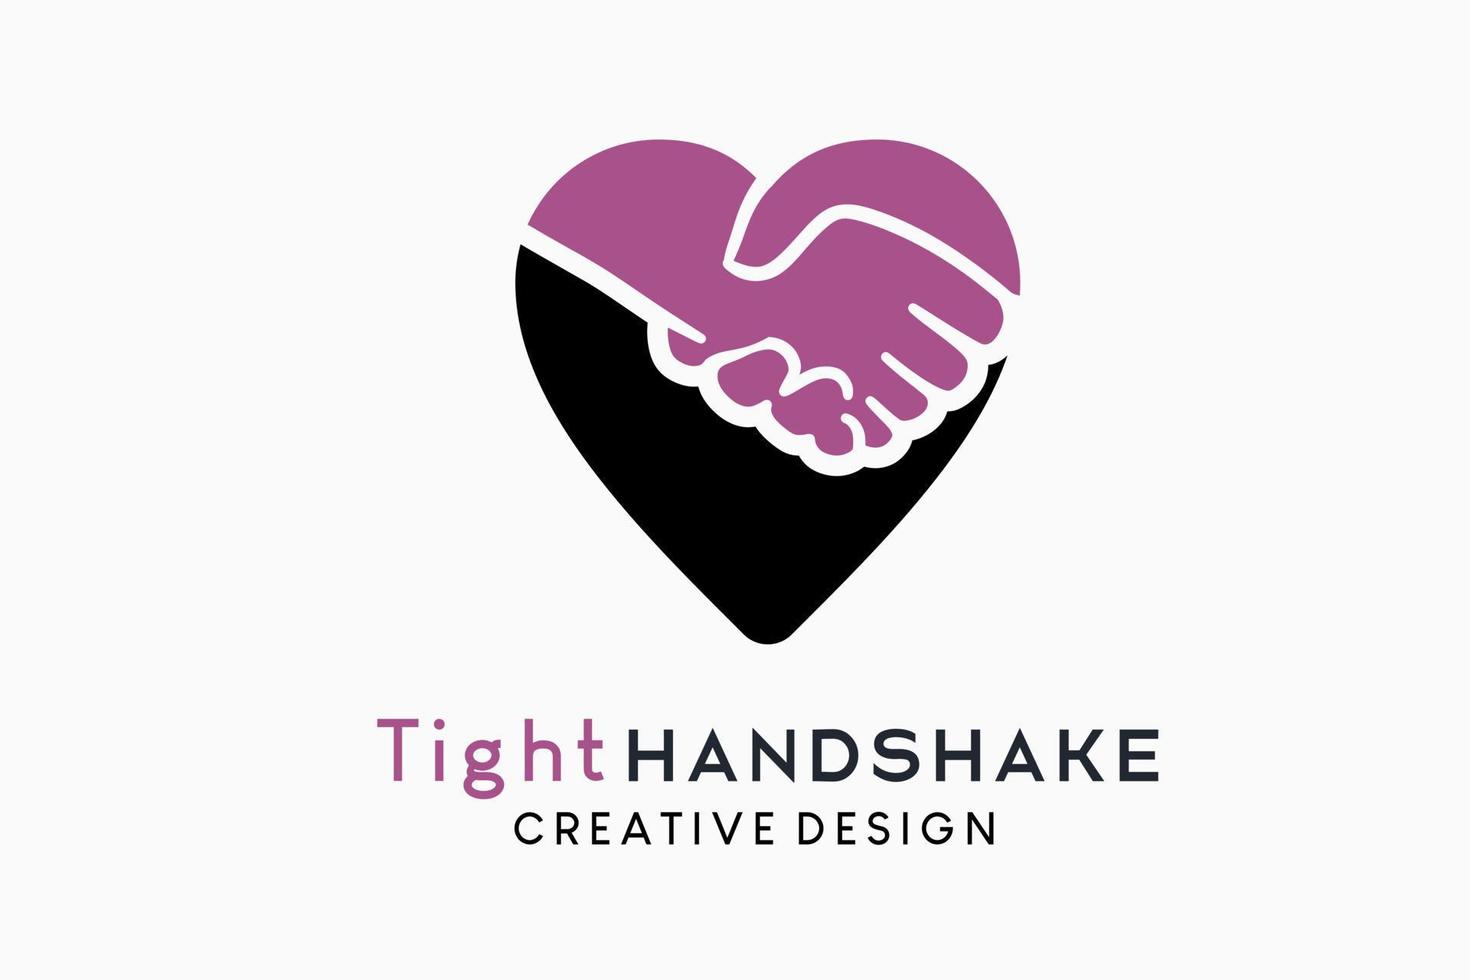 handshake logo design in creative concept in heart icon vector